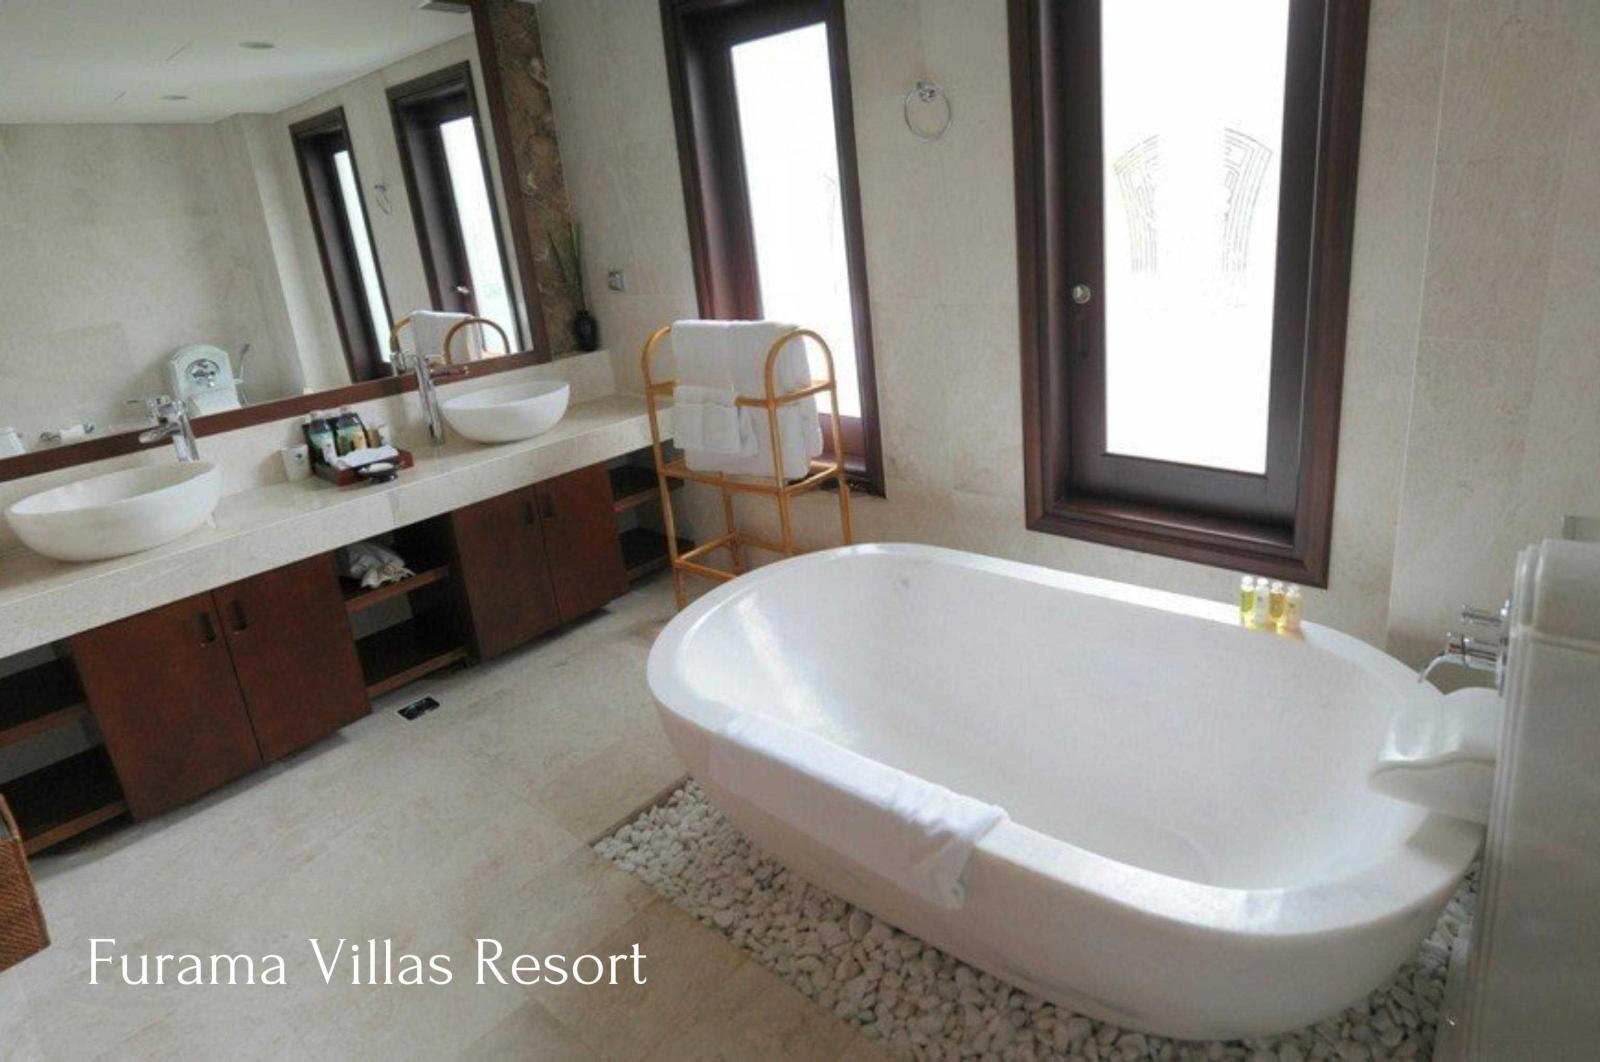 Furama 3 bedroom villa for sale, lowest price.